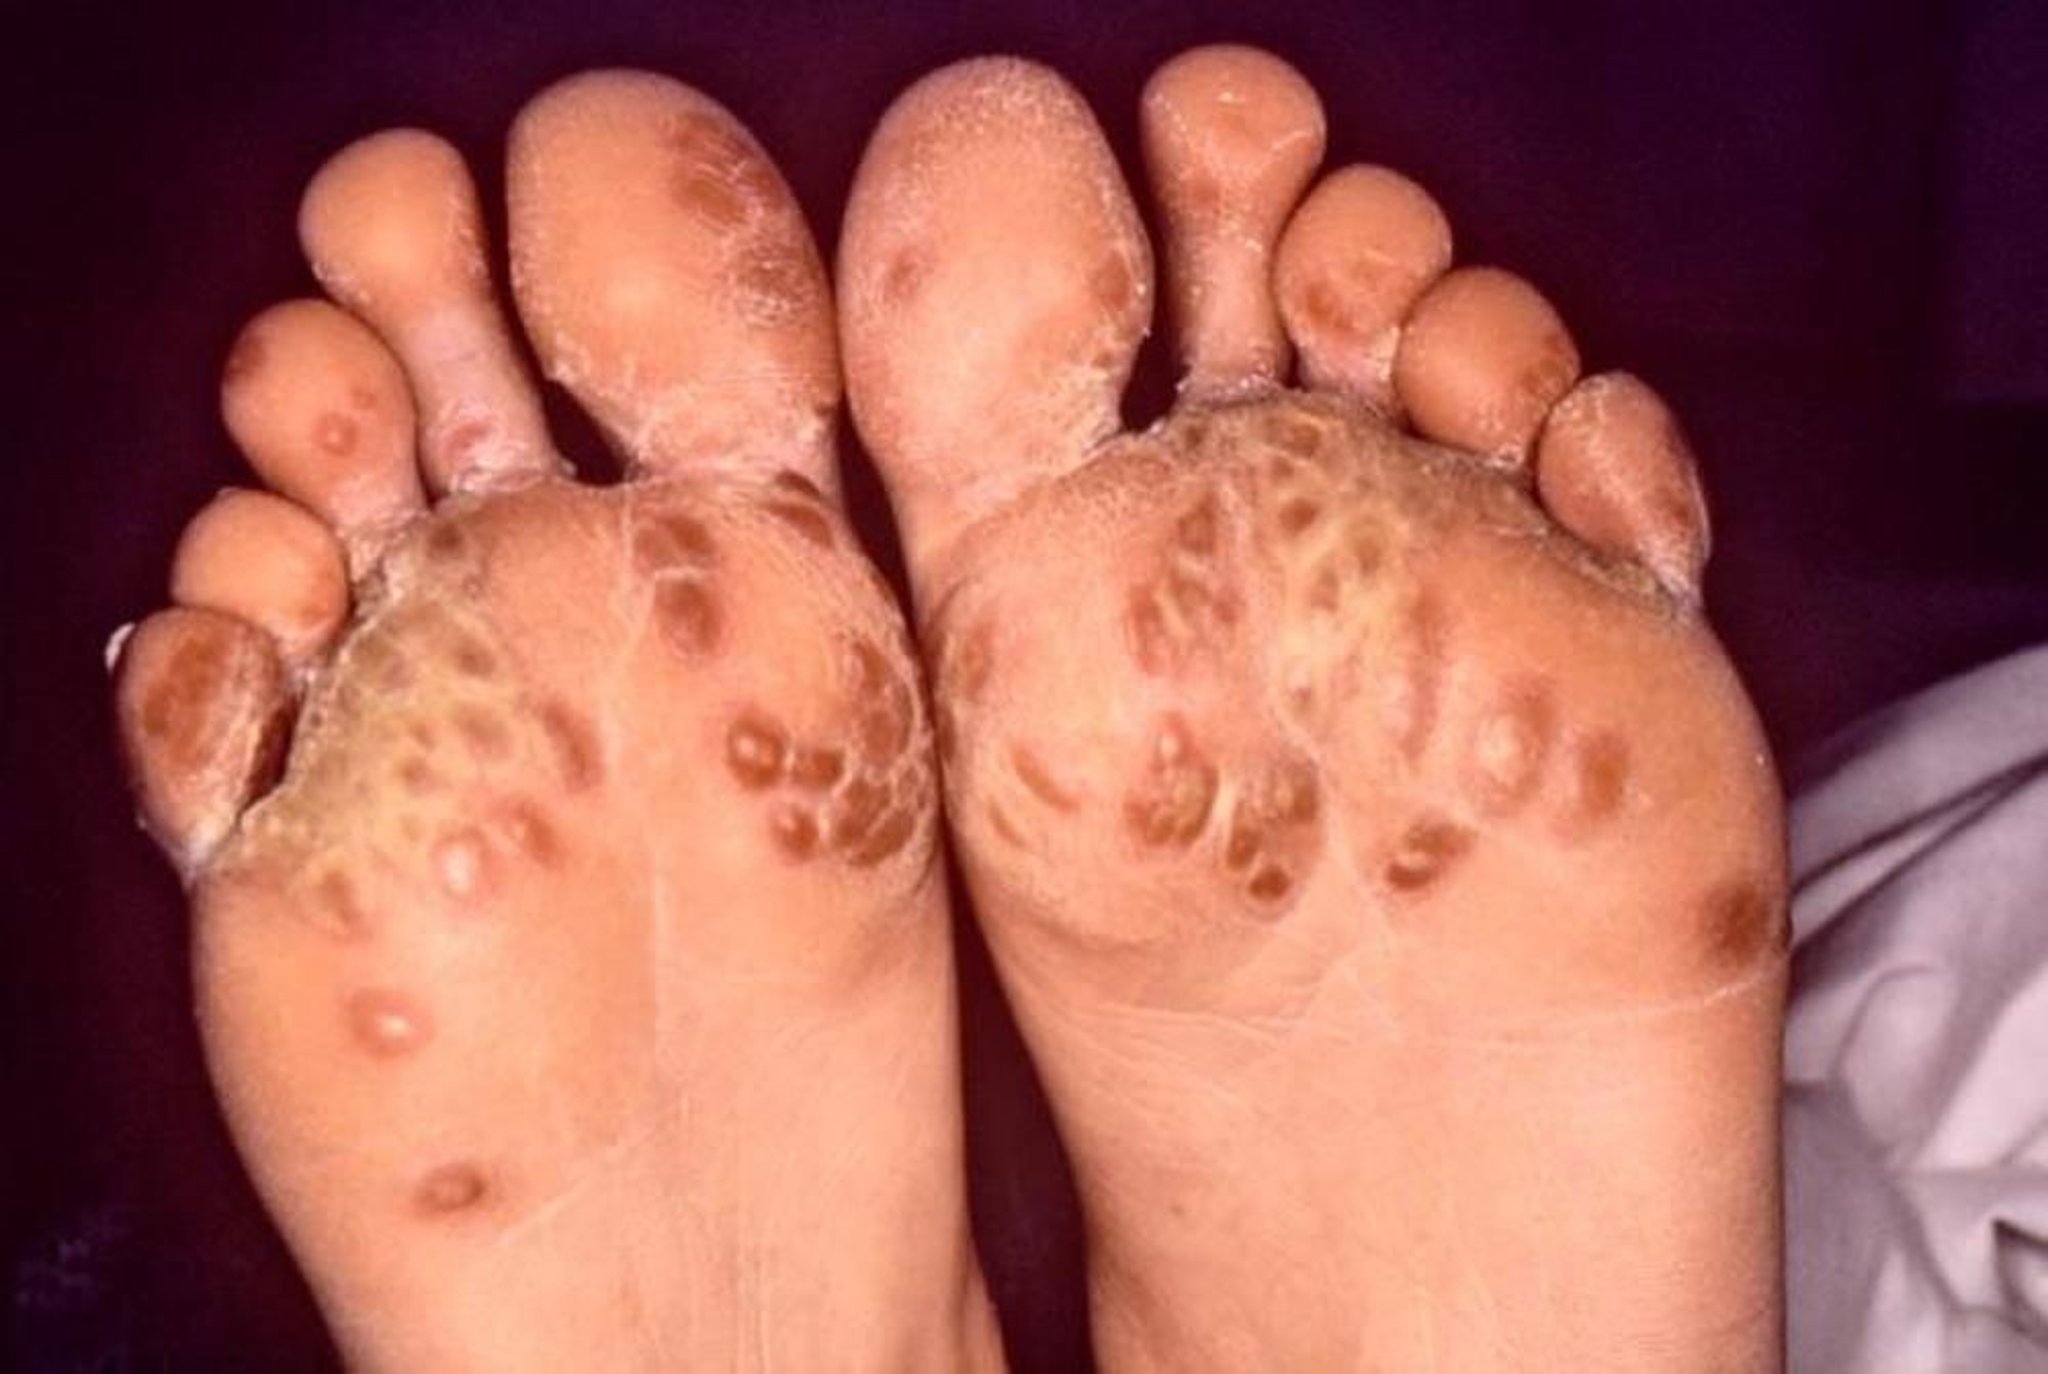 Artrite reativa que afeta os pés